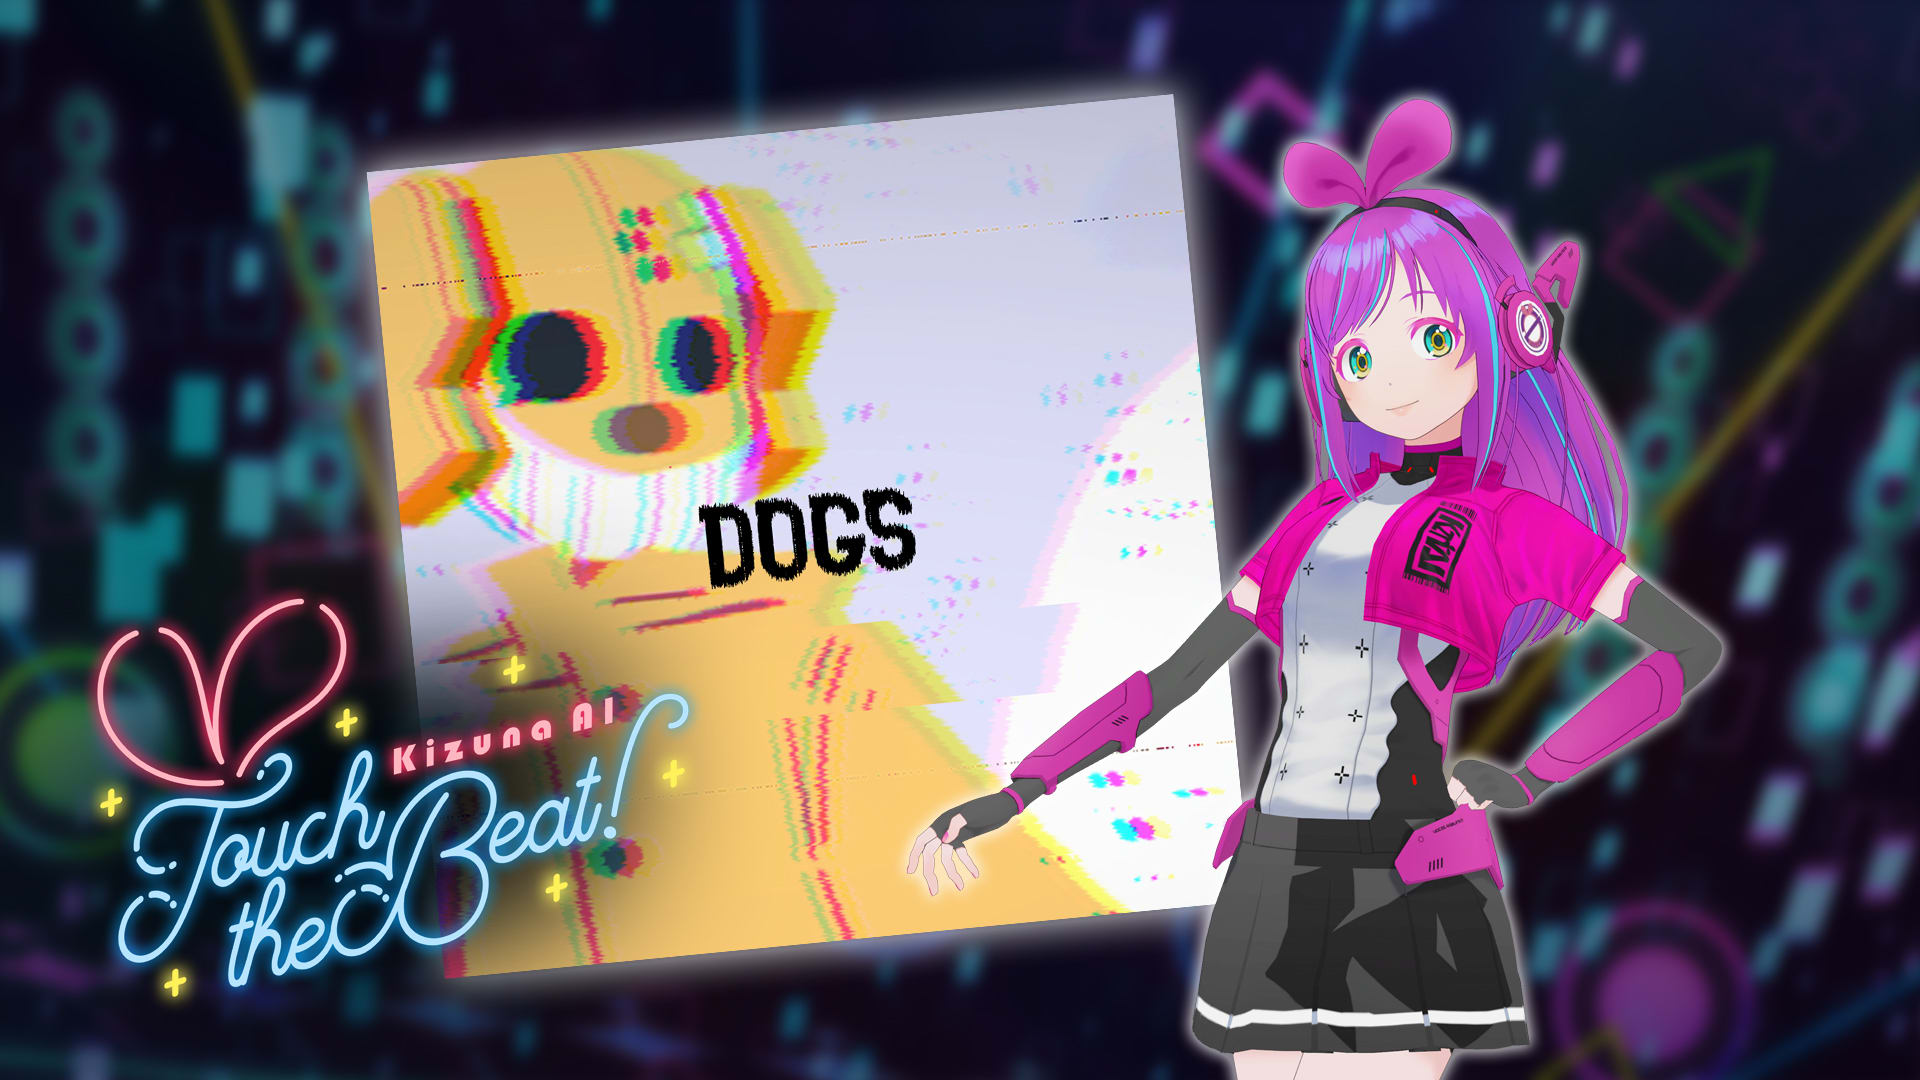 Kizuna AI - Touch the Beat! - Modèle (Costume) DLC « #kzn » + Chanson additionnelle « DOGS ⌘HYNOME feat. #kzn »